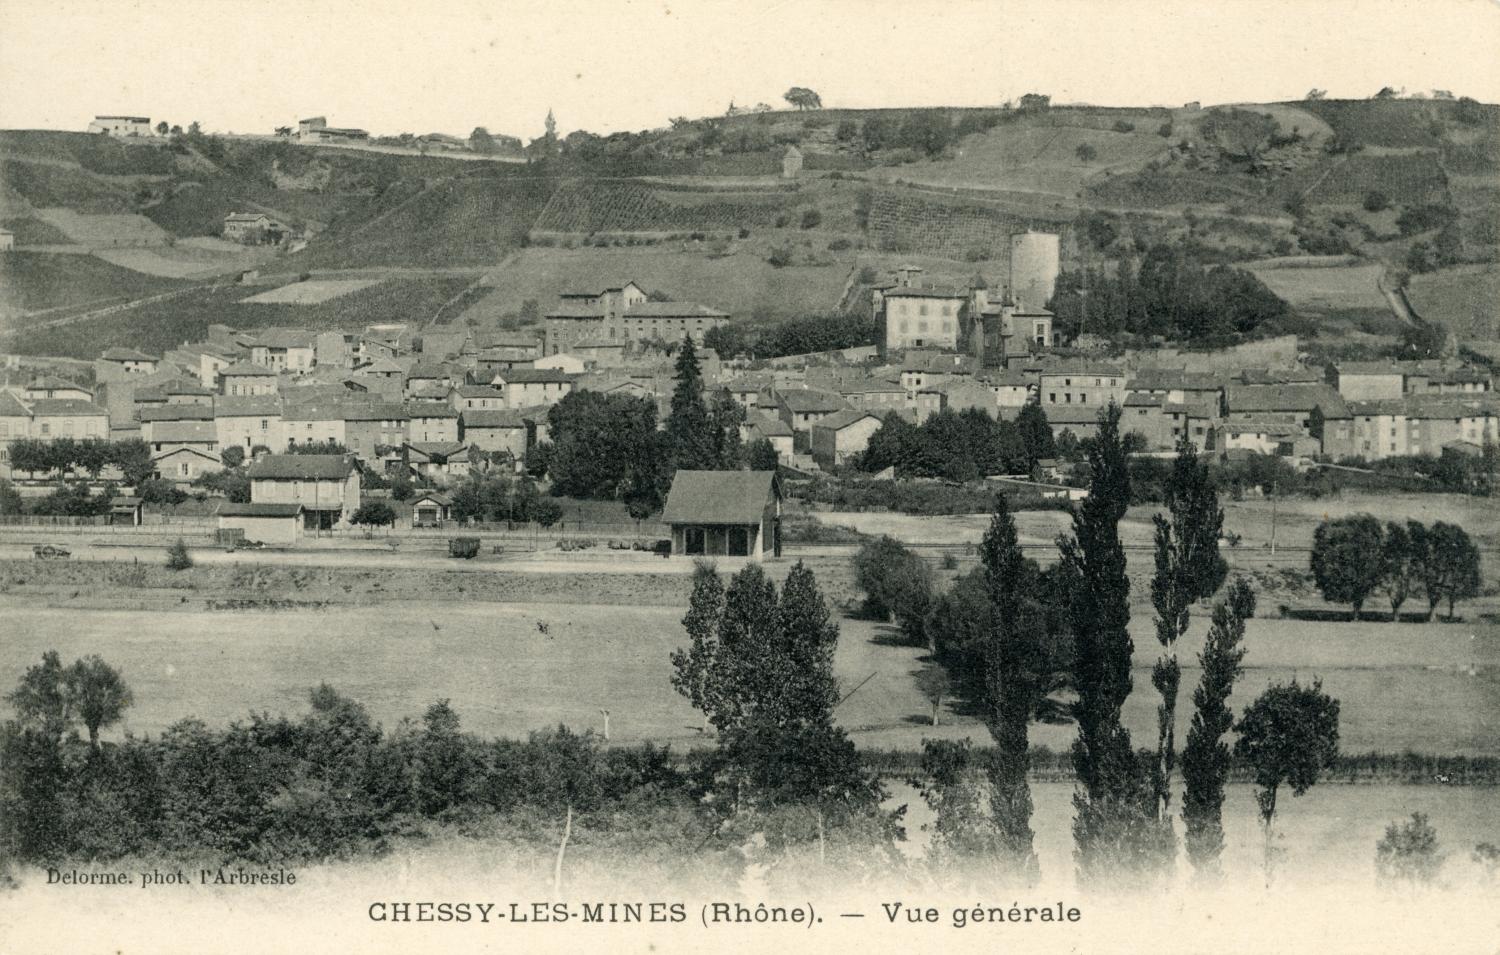 Chessy-les-Mines (Rhône). - Vue générale